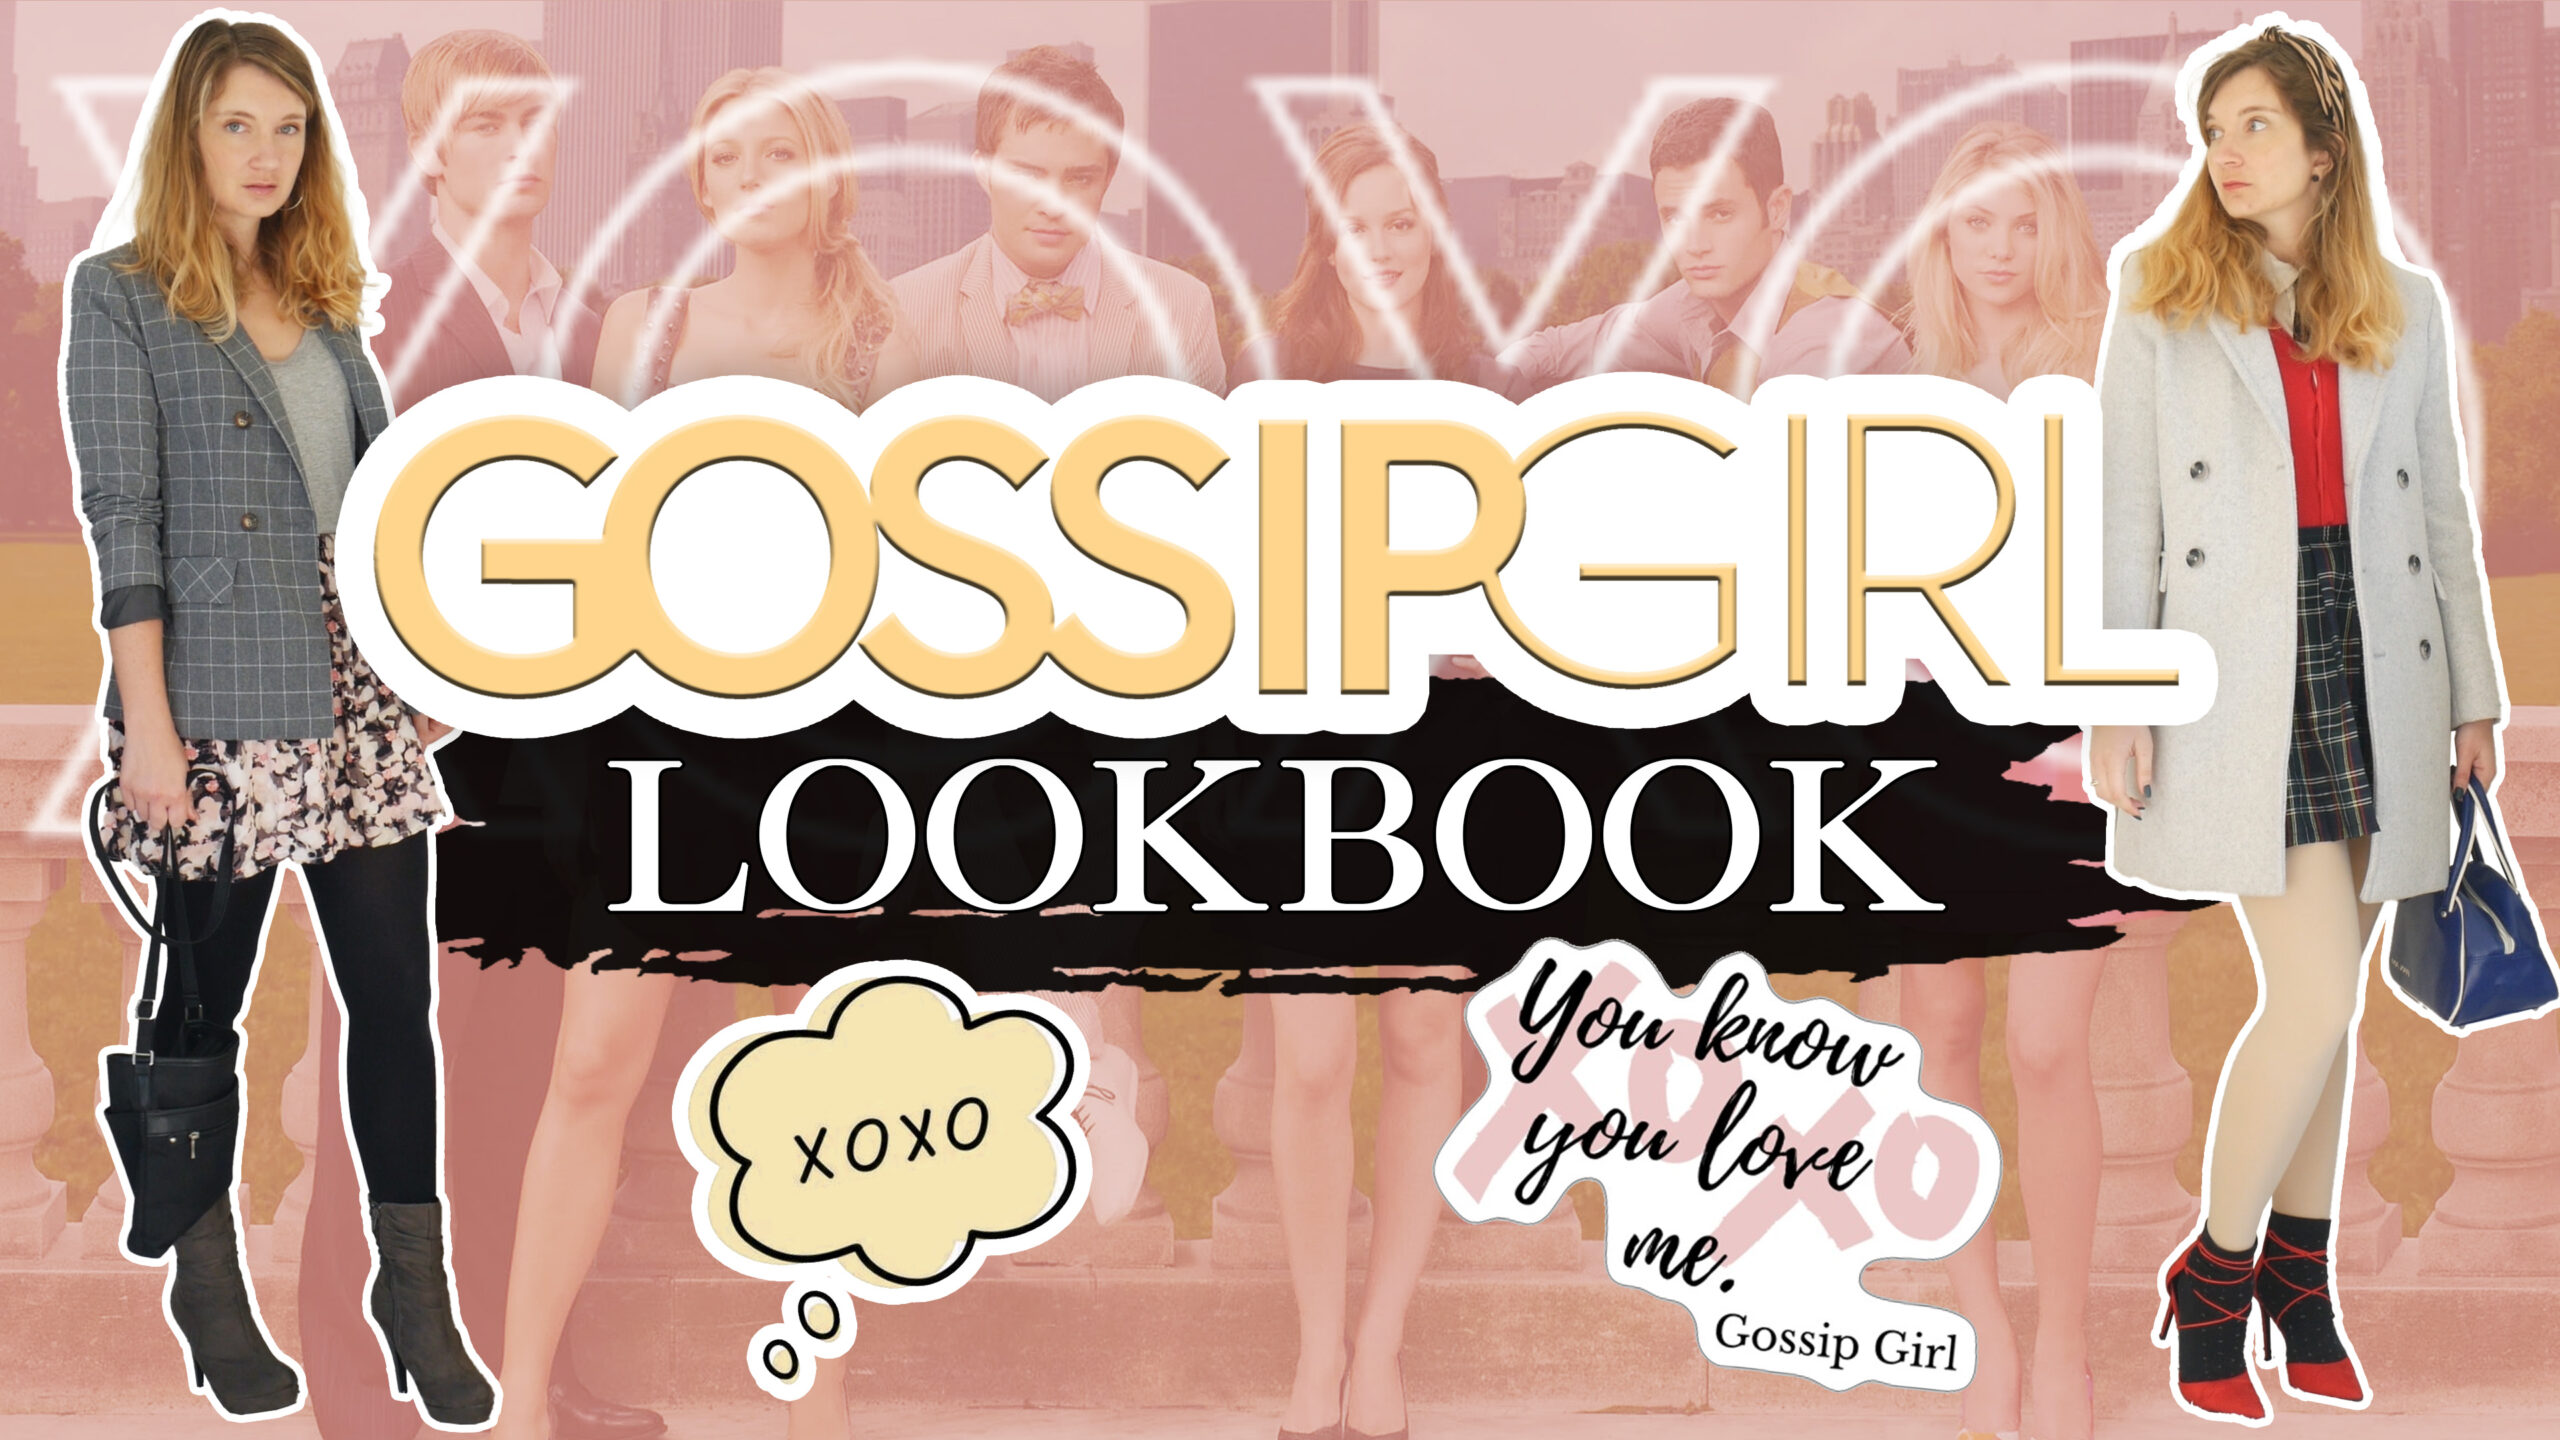 Blair Waldorf Gossip Girl Fashion - Blair Waldorf's Best Outfits on Gossip  Girl